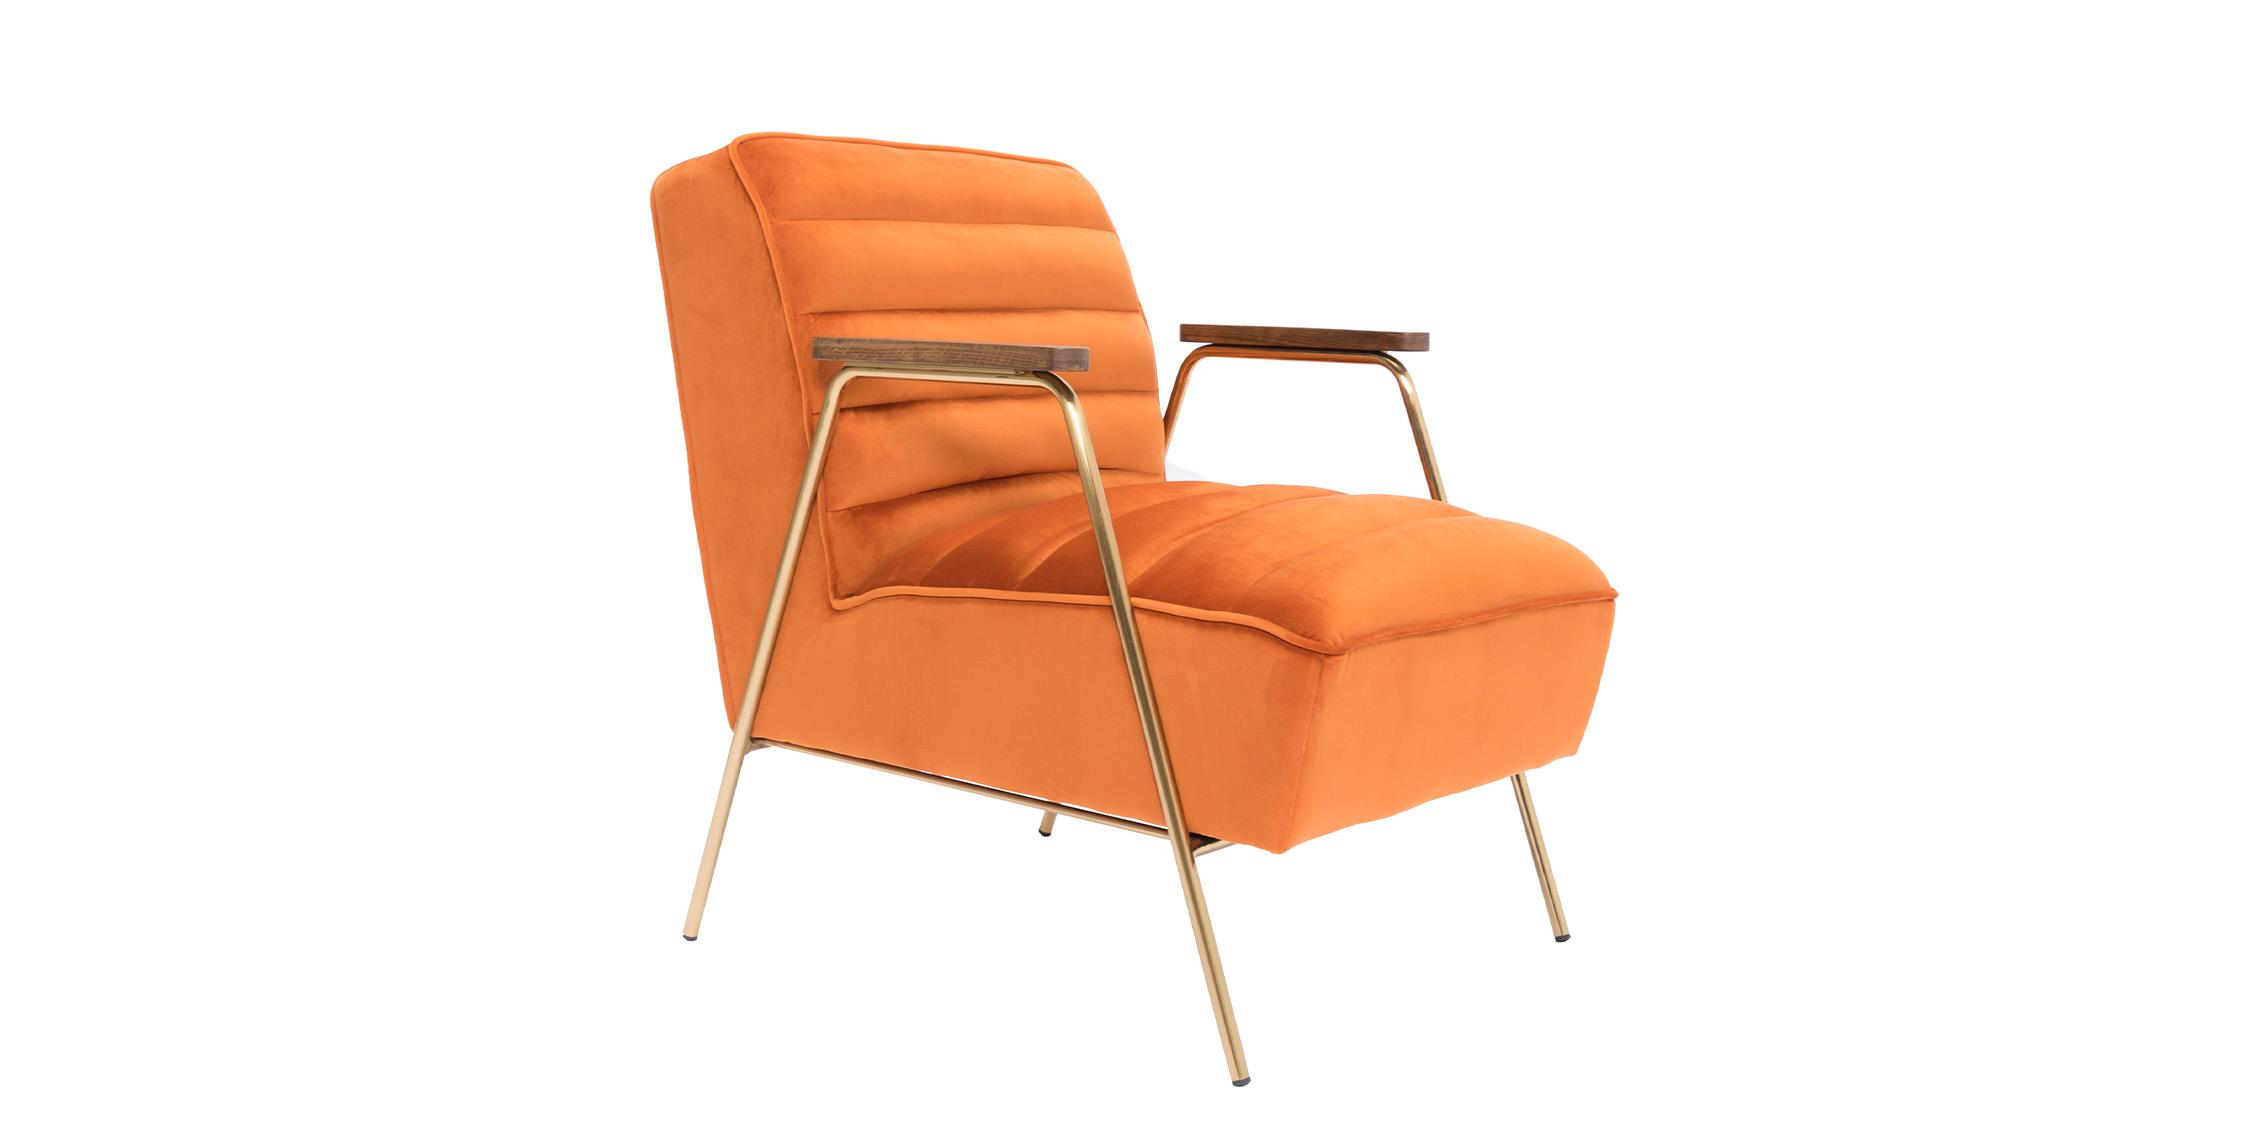 Contemporary, Modern Accent Chair WOODFORD 521Orange 521Orange in Orange, Gold Fabric